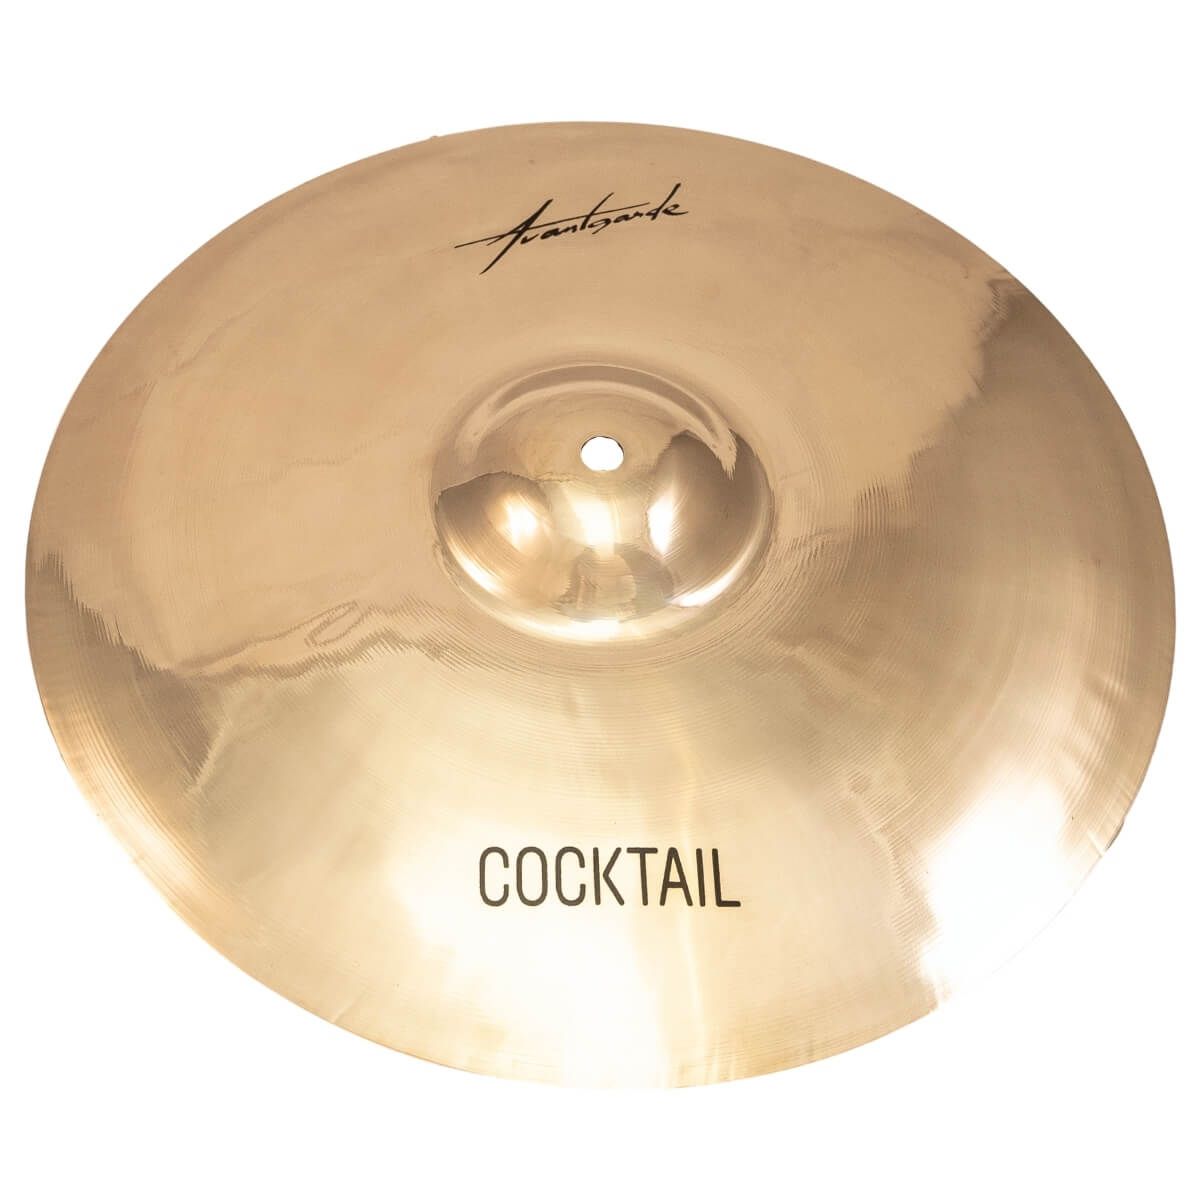 Avantgarde Cocktail 18" crash cymbal